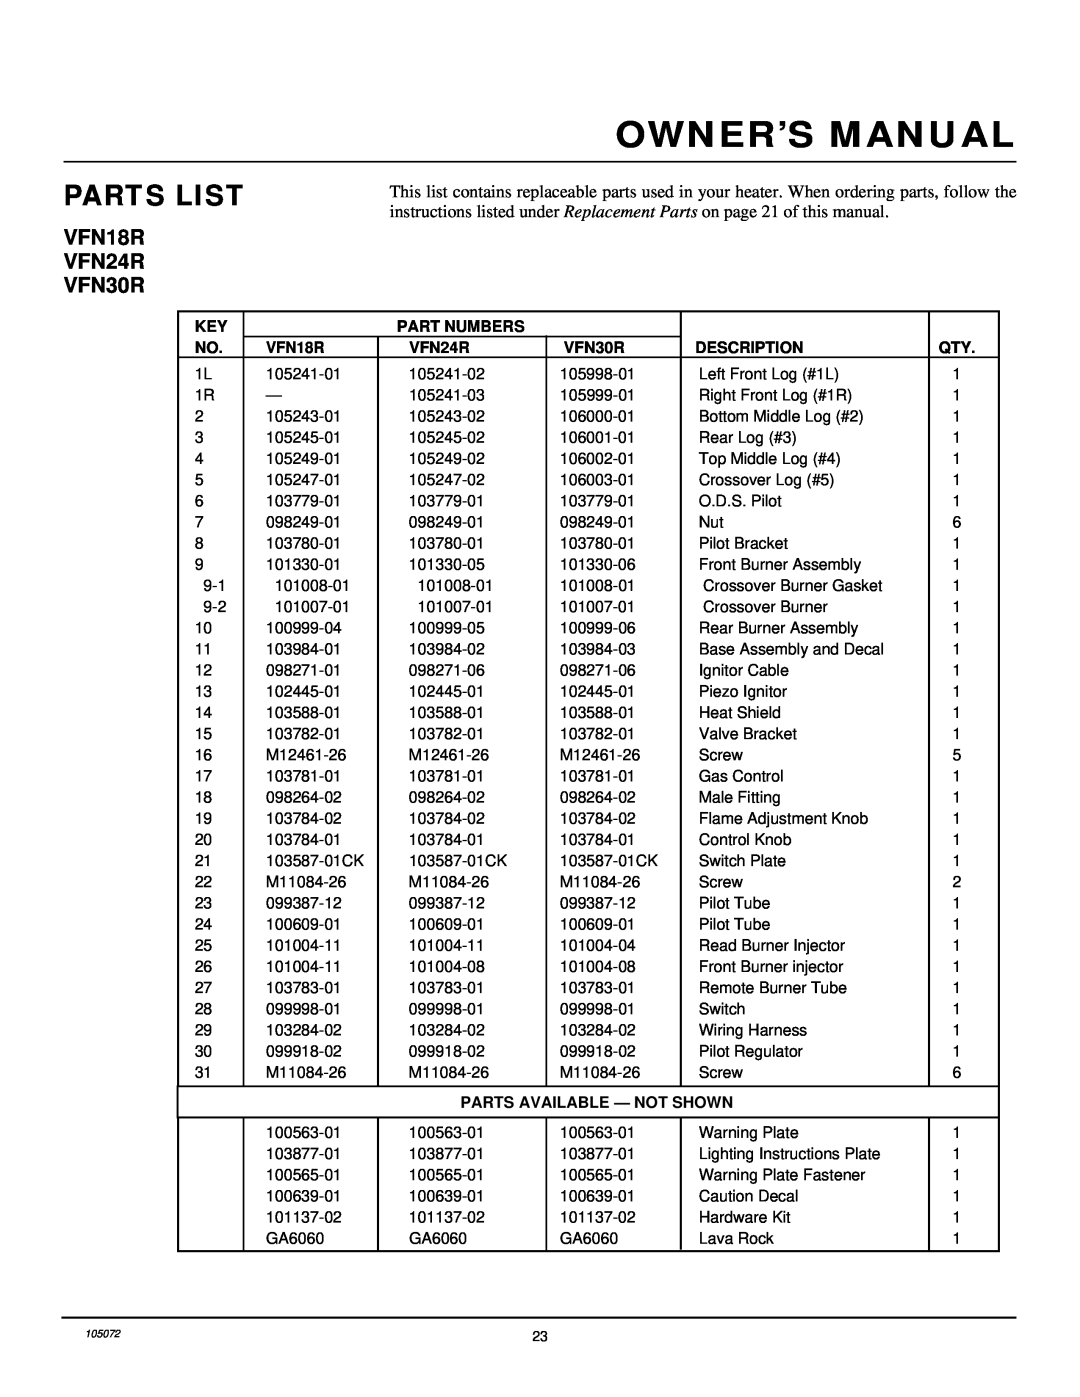 FMI VFN30R installation manual Parts List, Part Numbers, VFN18R, VFN24R, Description, Parts Available - Not Shown 